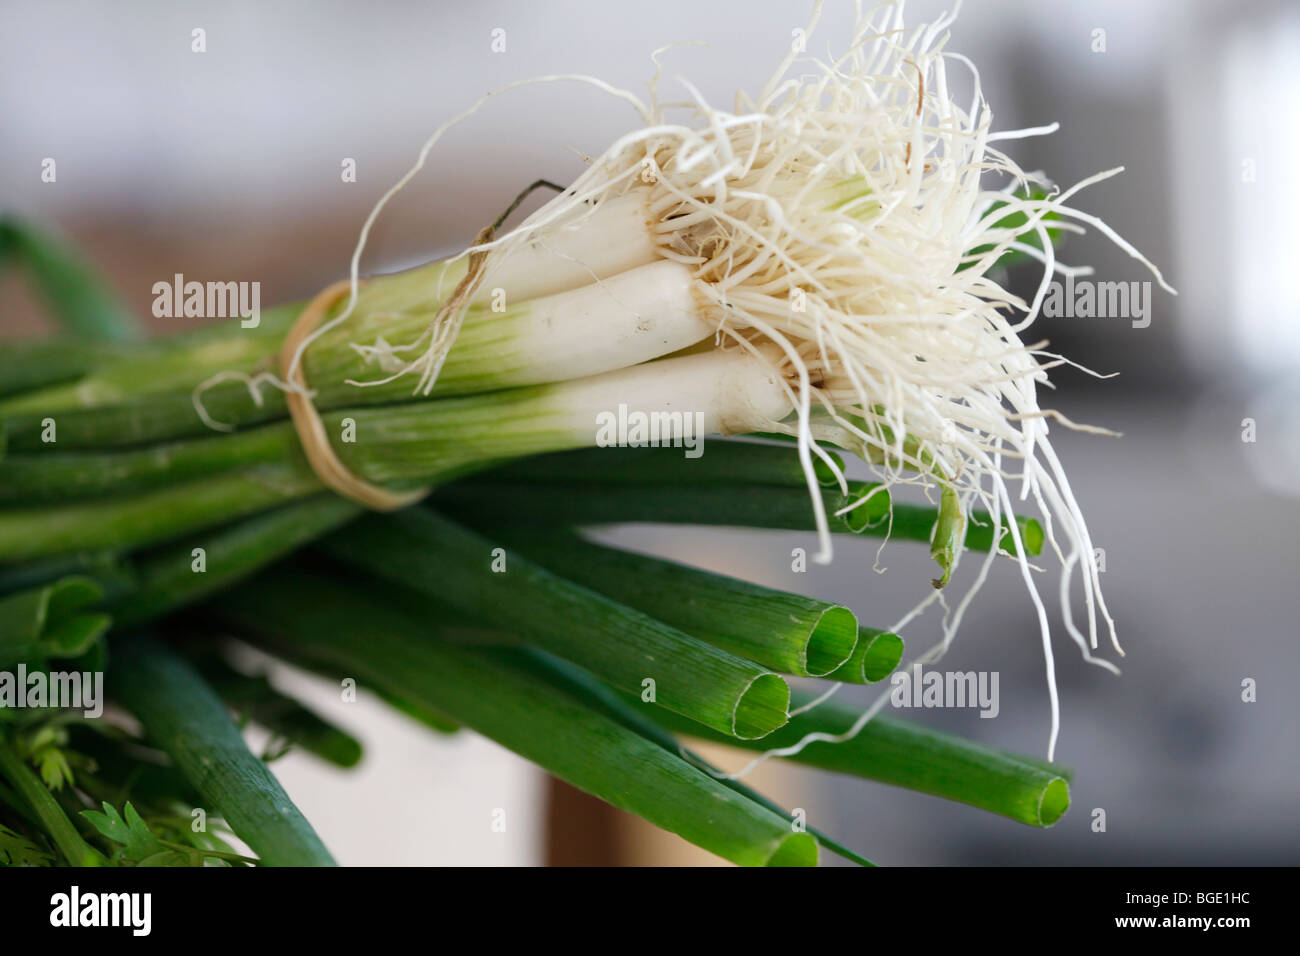 spring onion, scallions, green onions Stock Photo